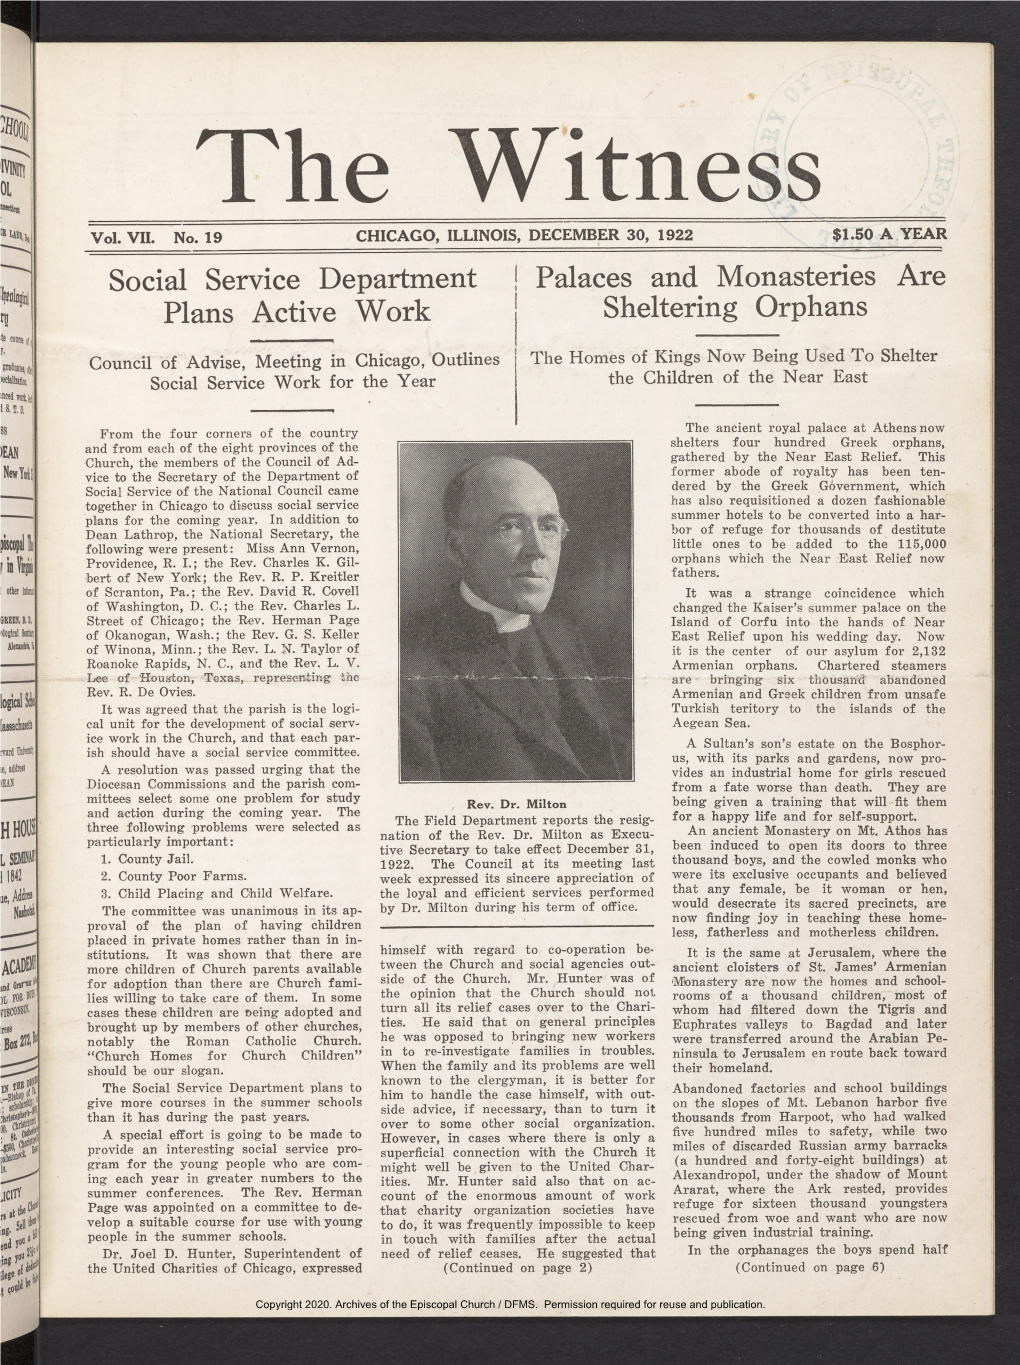 1922 the Witness, Vol. 7, No. 19. December 30, 1922